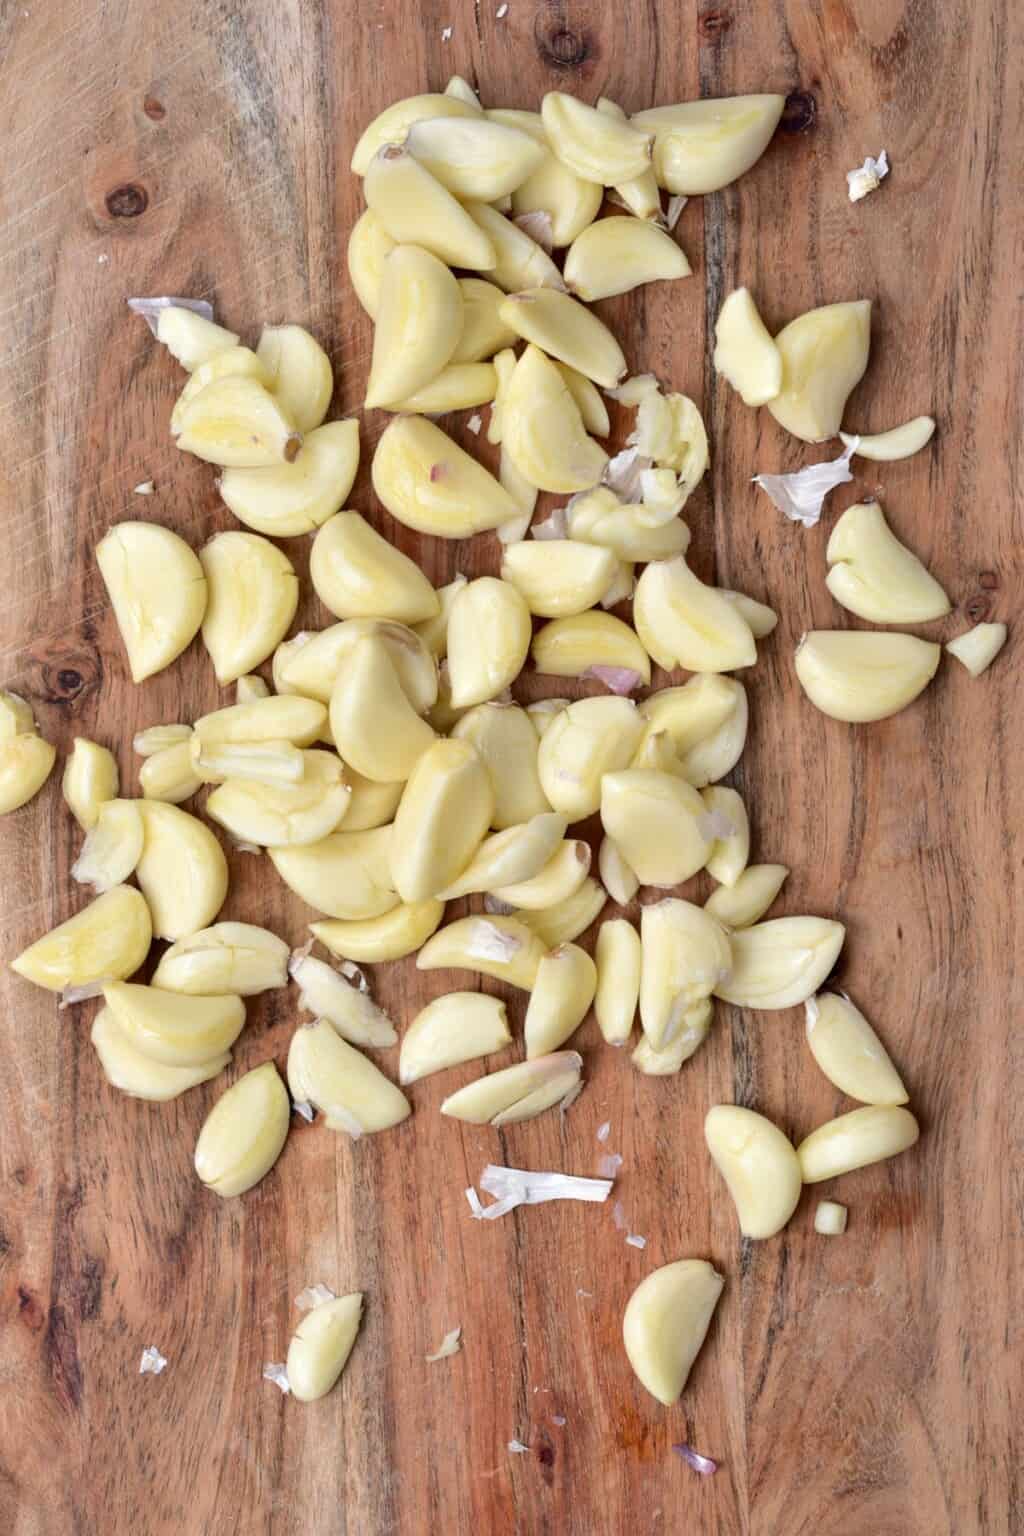 How To Make Lebanese Garlic Sauce (Toum) - Alphafoodie